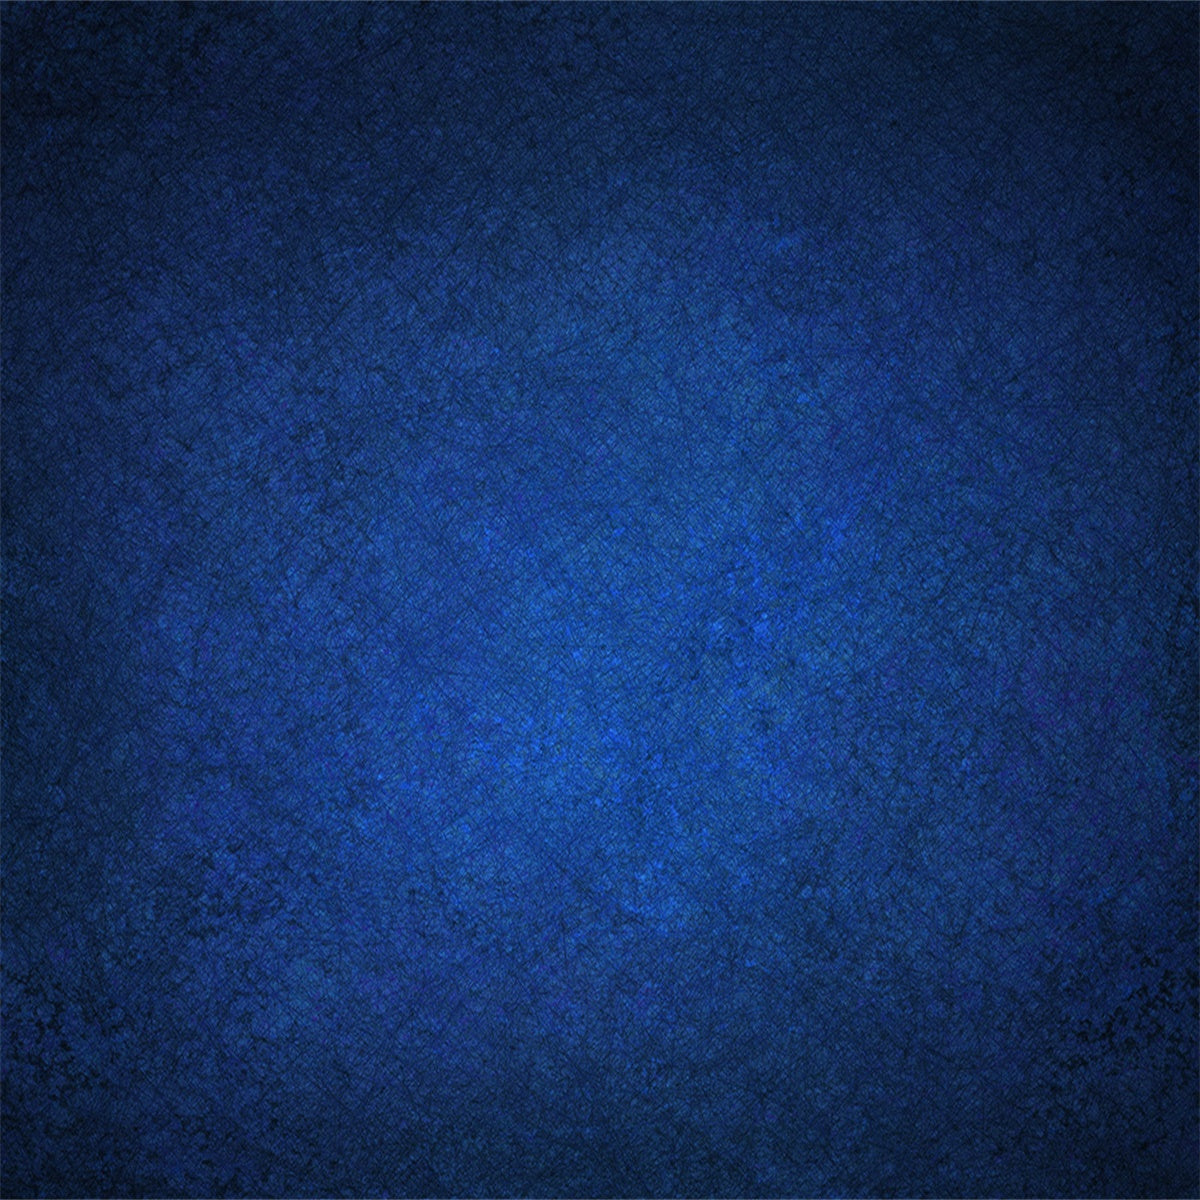 Deep Blue Master Abstract Photo Backdrop